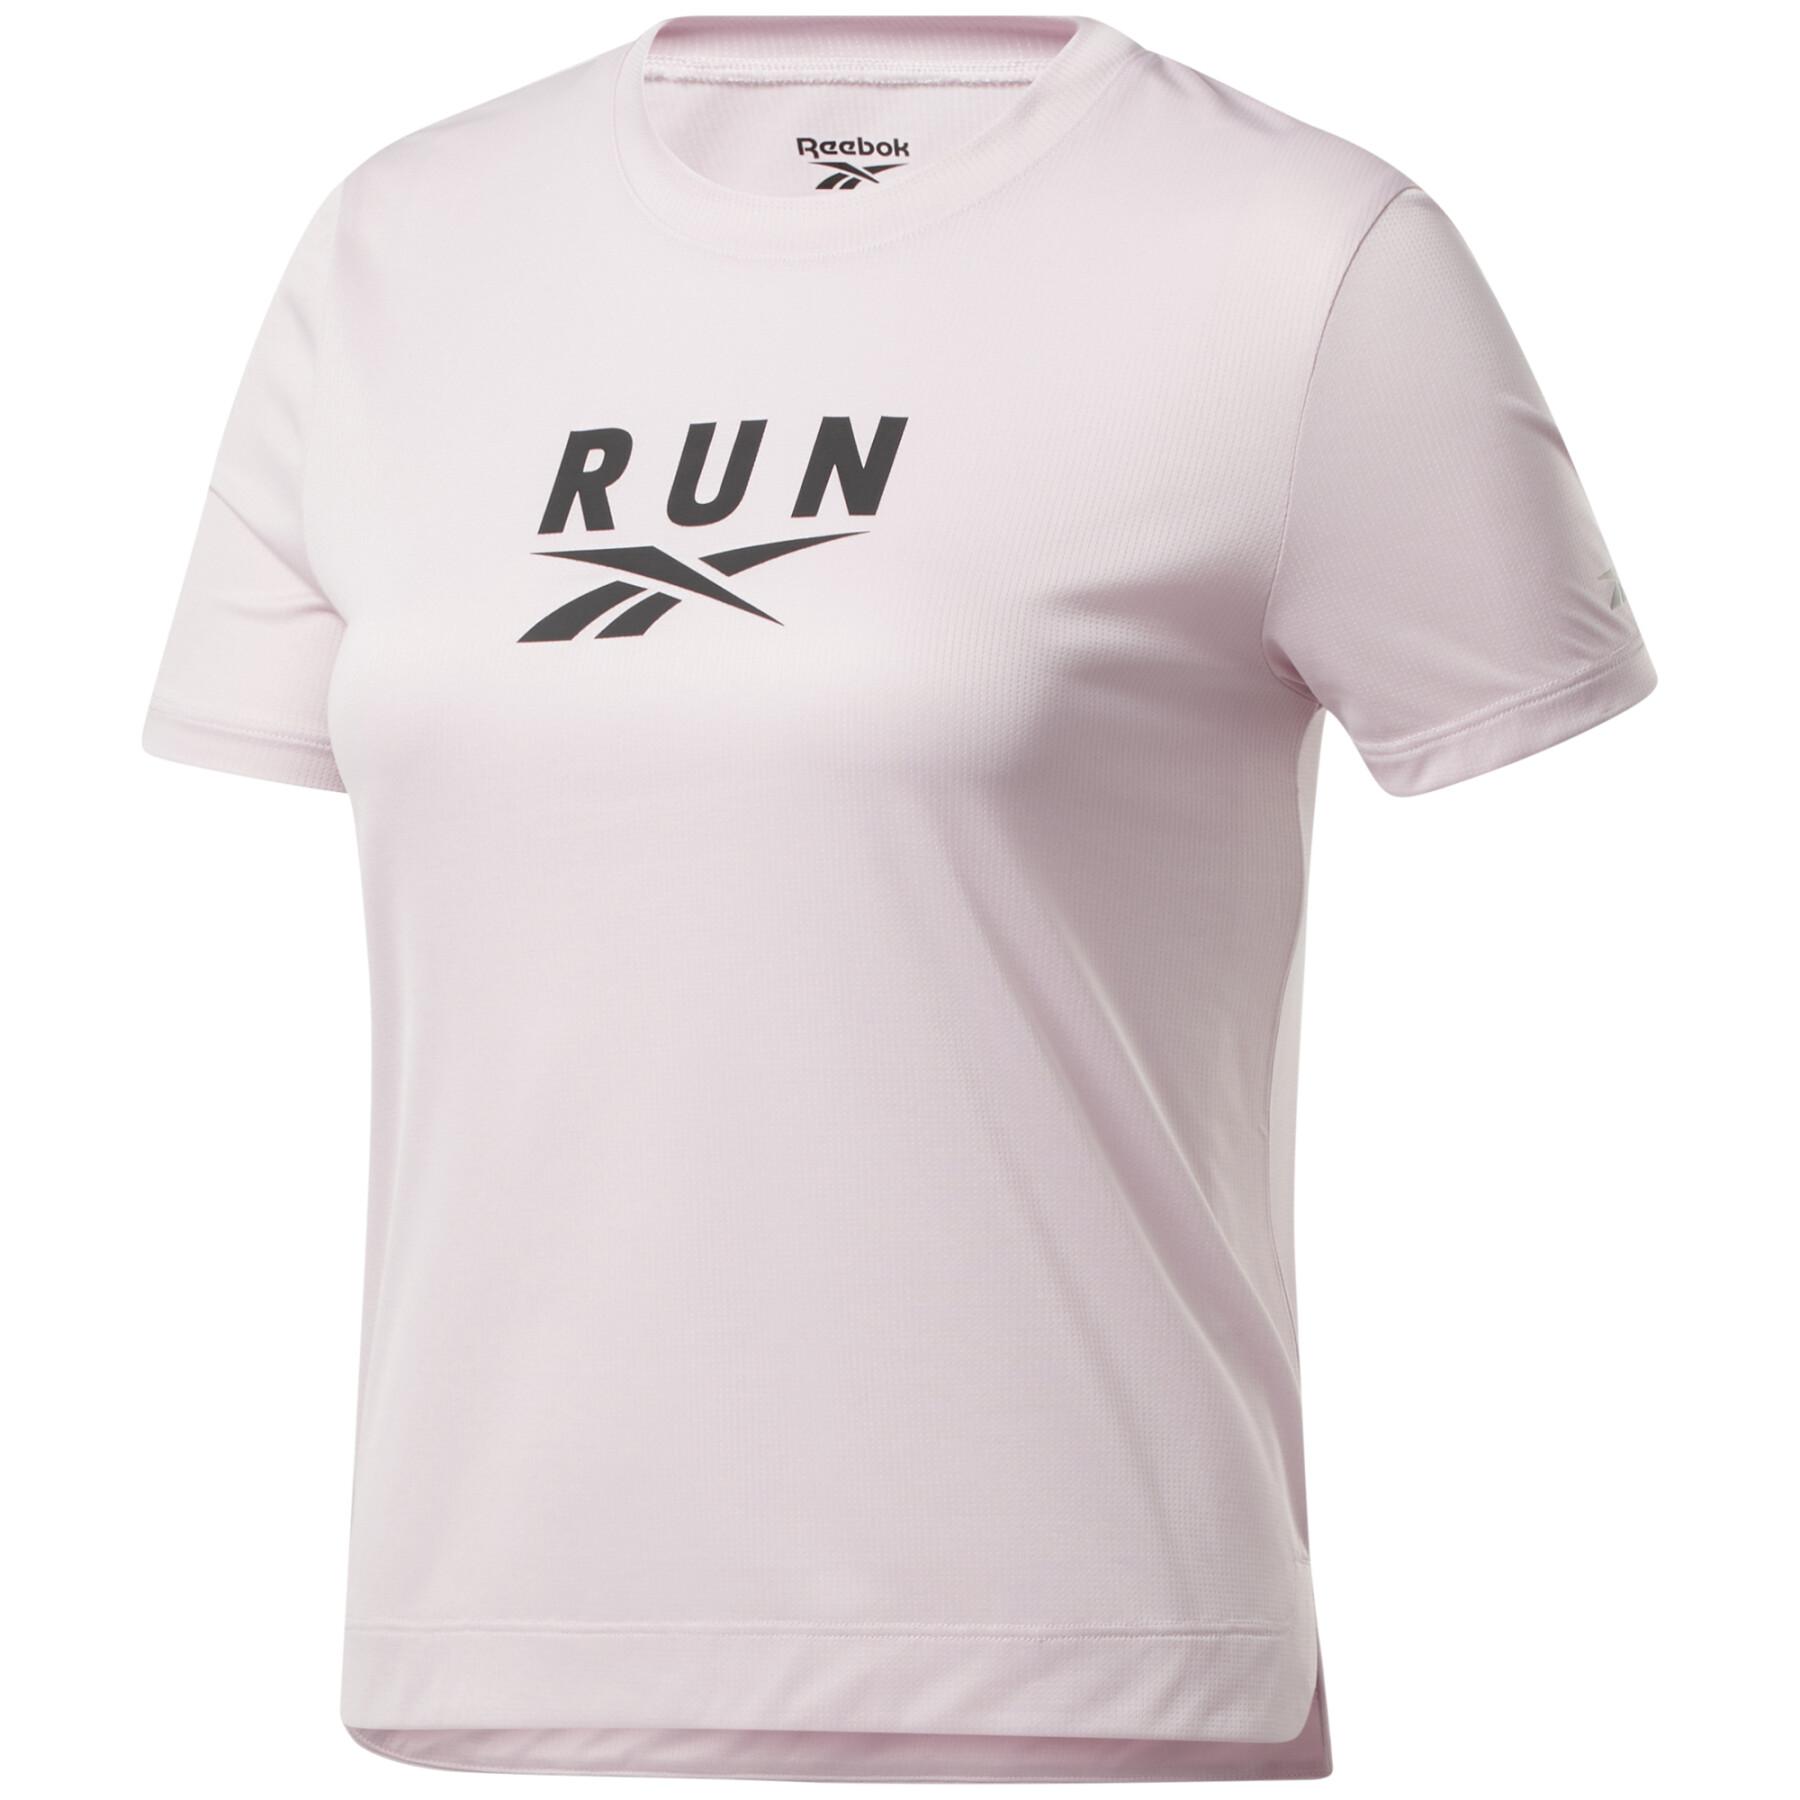 Vejrudsigt mavepine Uundgåelig Women's T-shirt Reebok Speedwick Workout Ready Run - Short Sleeve - The  Heights - Womens Clothing